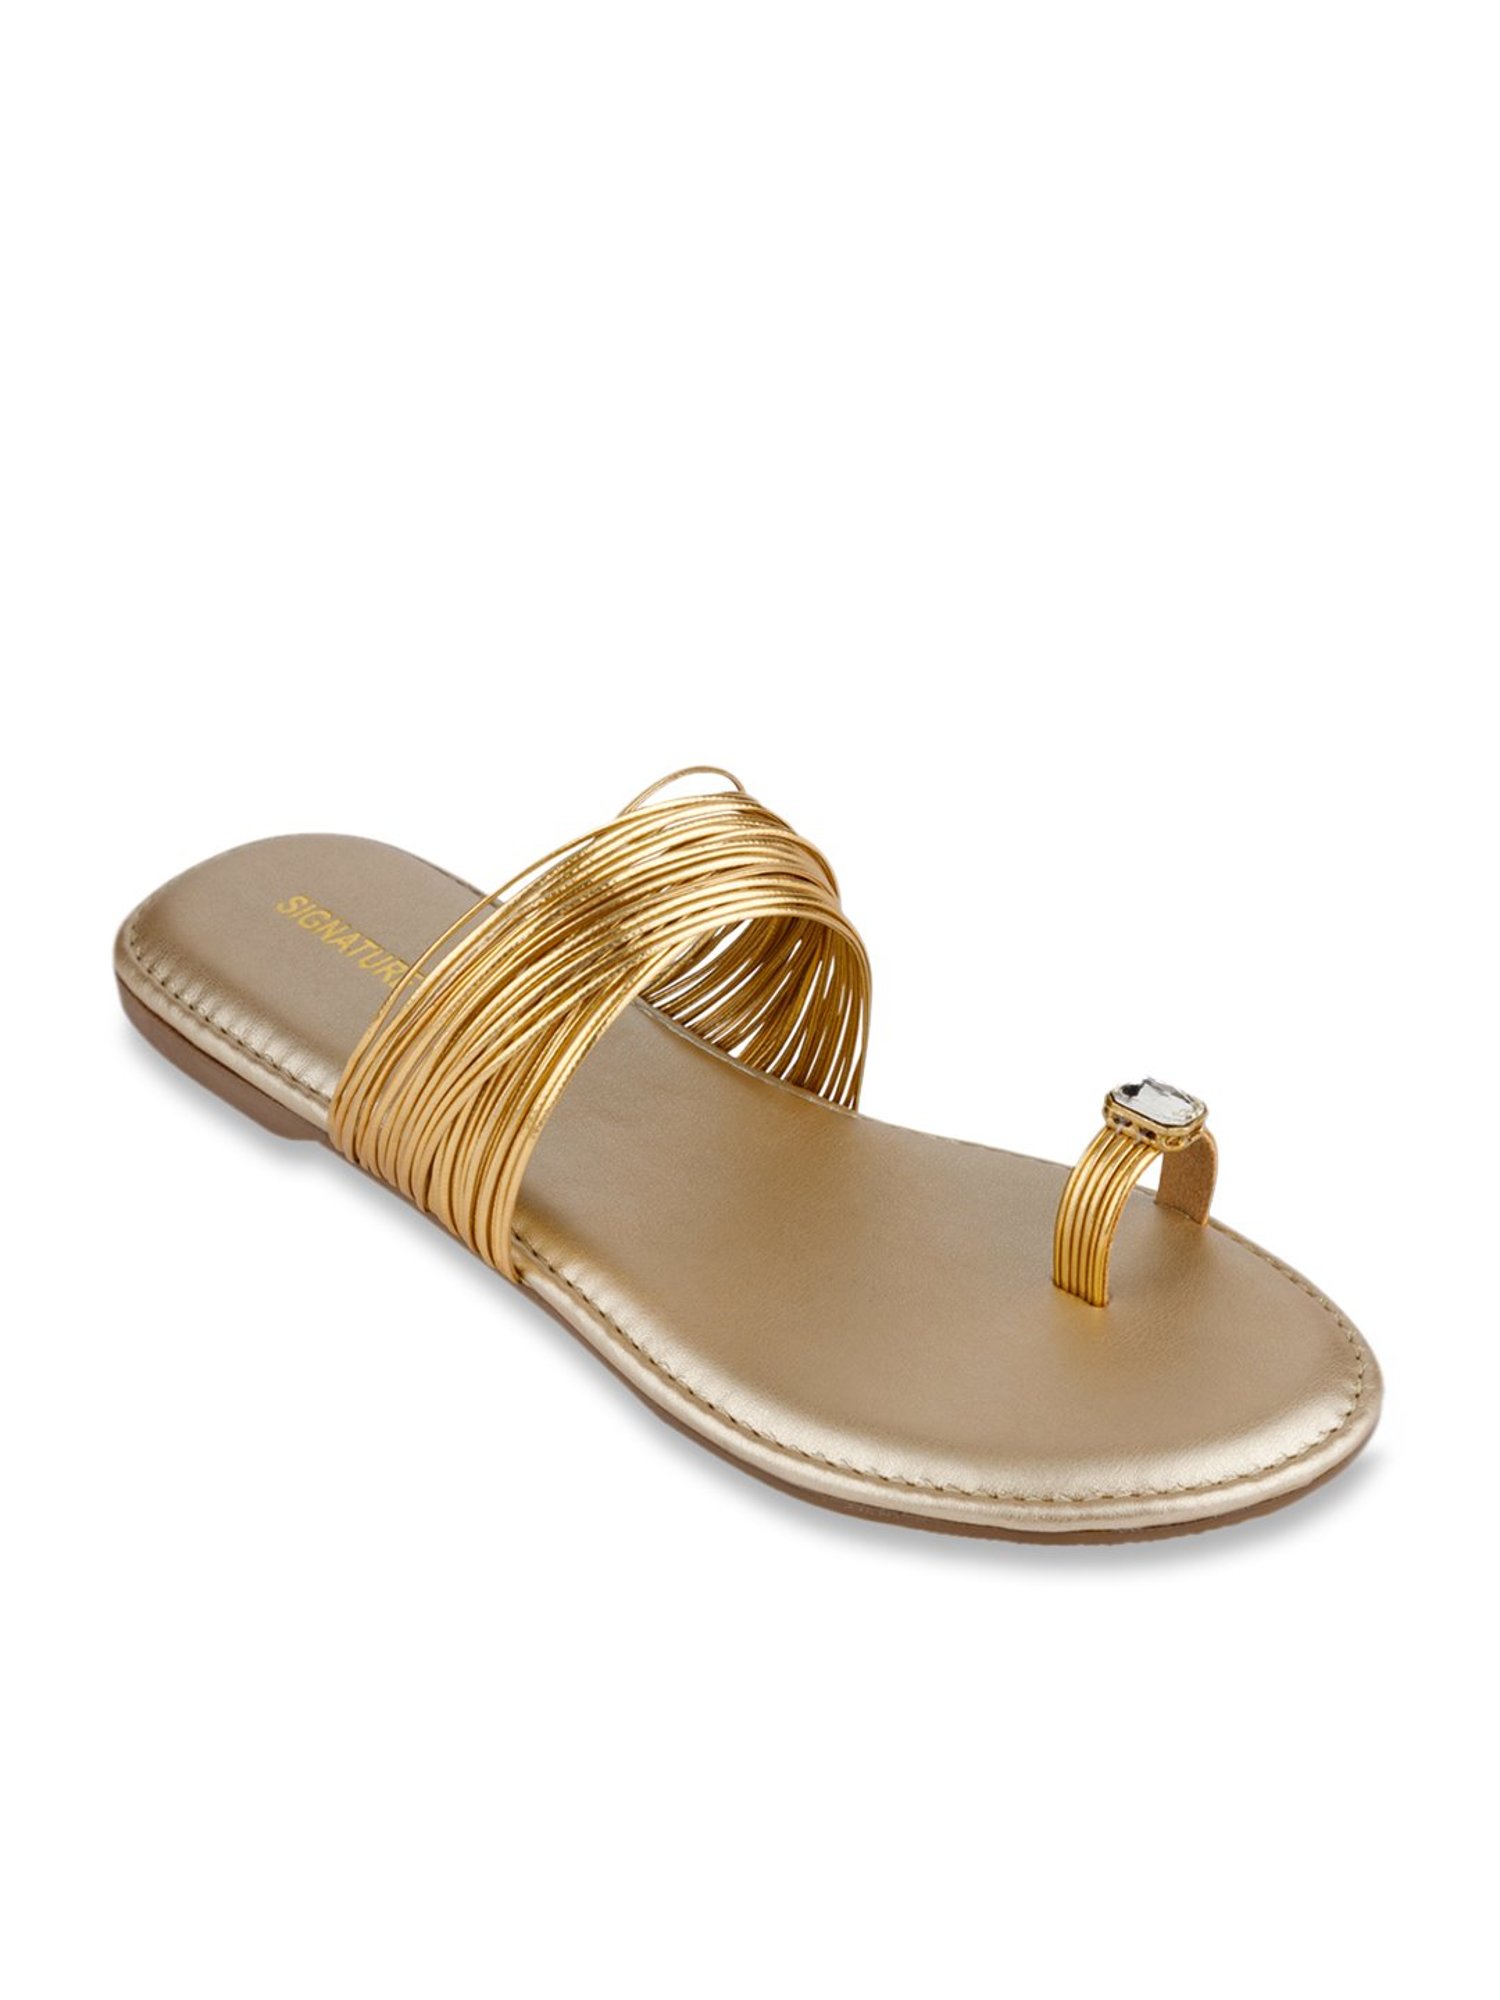 Cape Robbin Moira-18 Gold Chain Flat Footbed Fashion Pool Slide Sandals  Size 9 | eBay